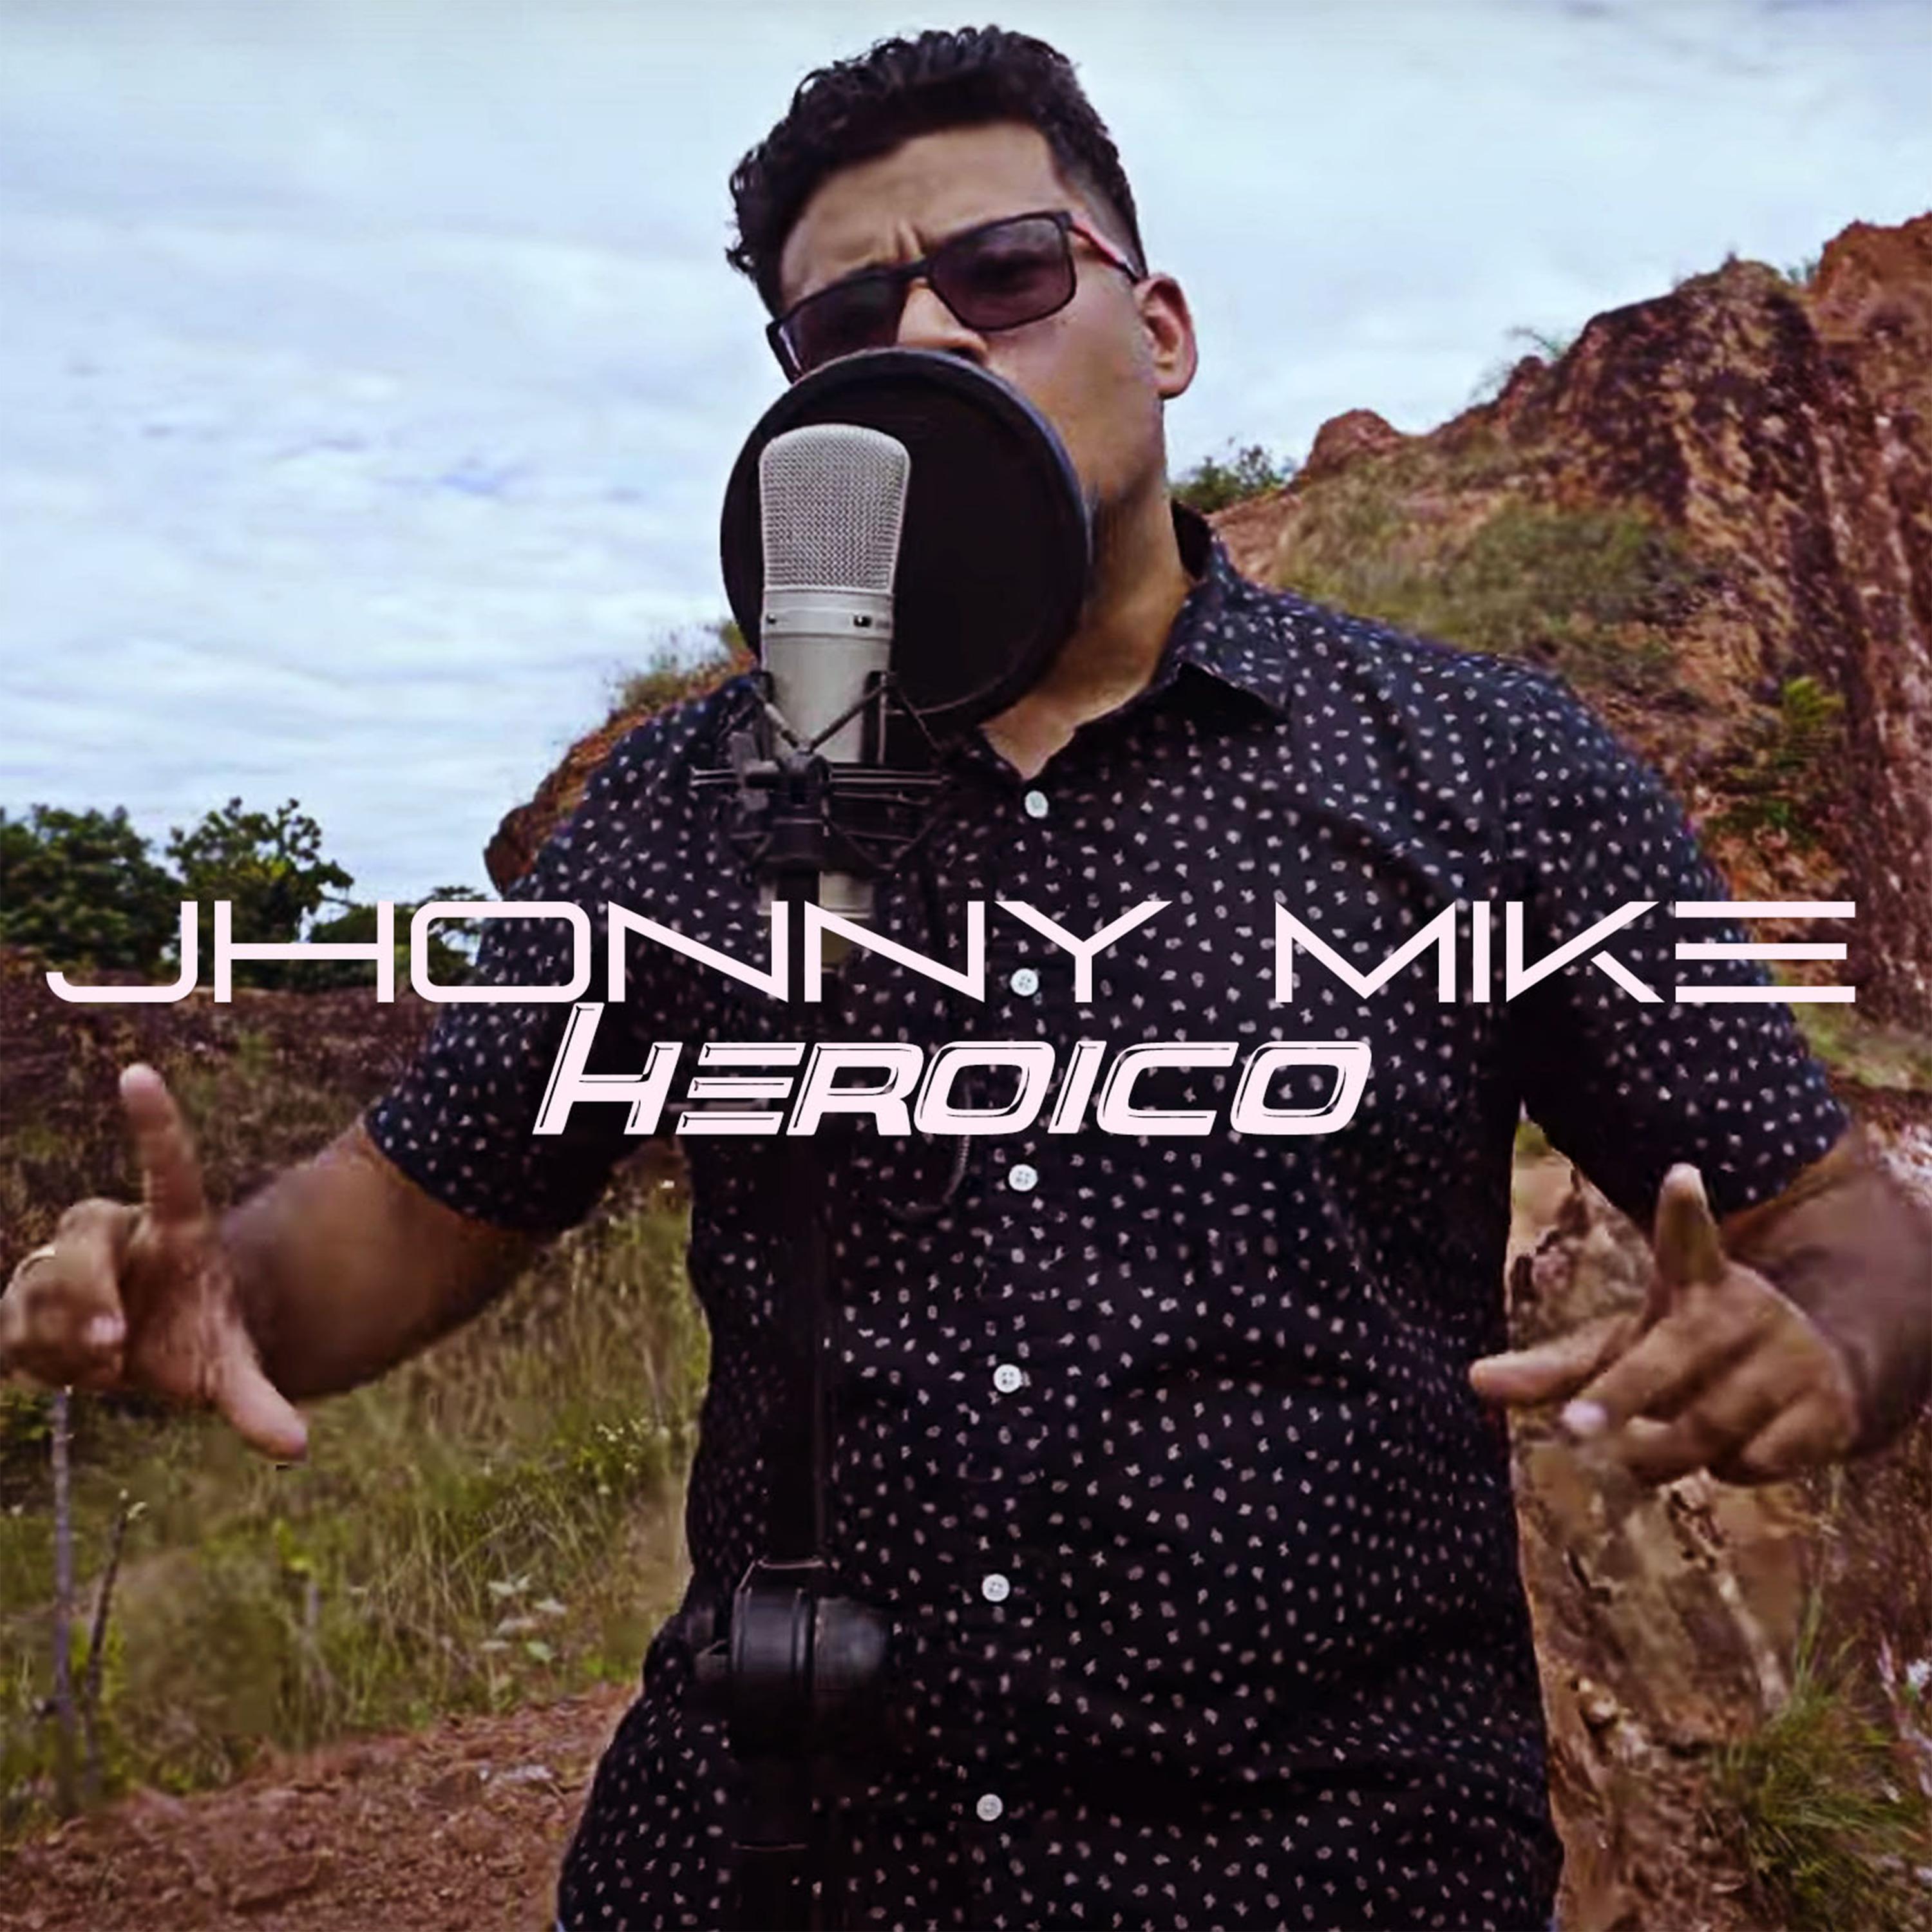 Jhonny Mike - Heroico